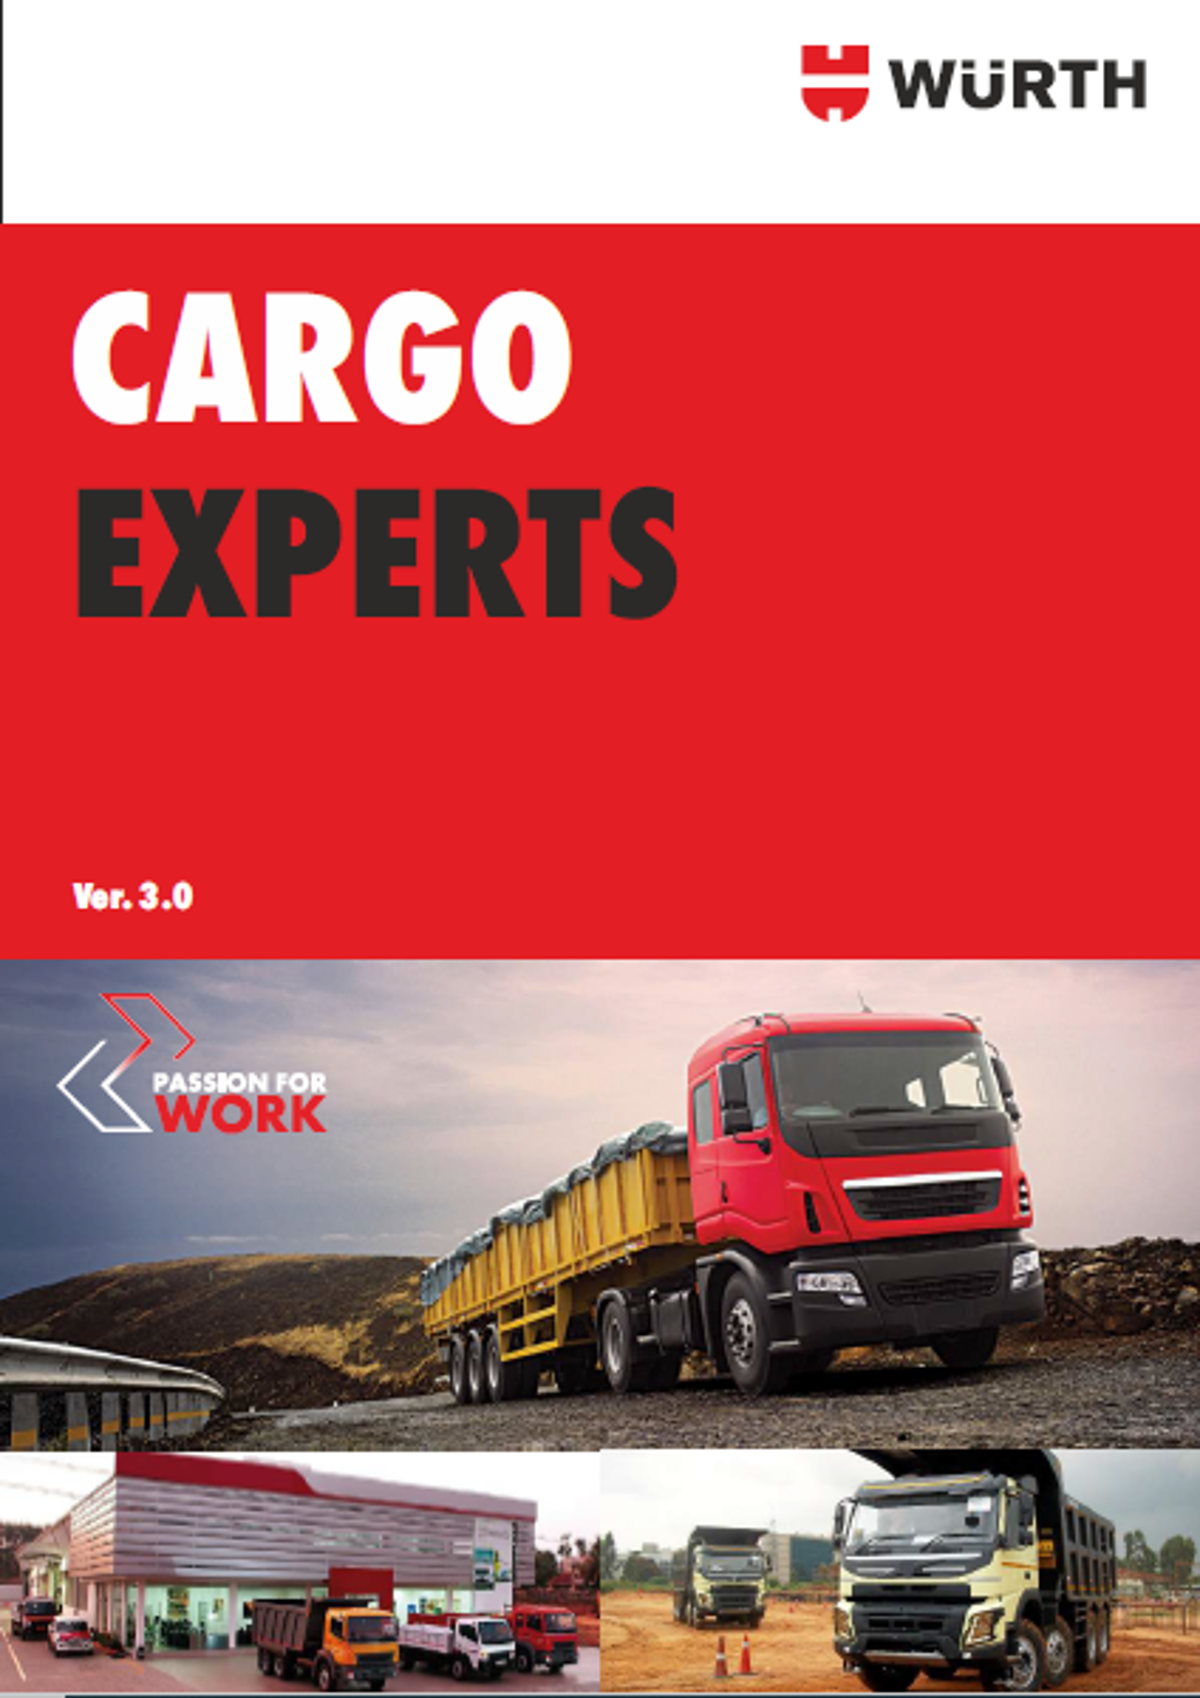 Cargo Expert